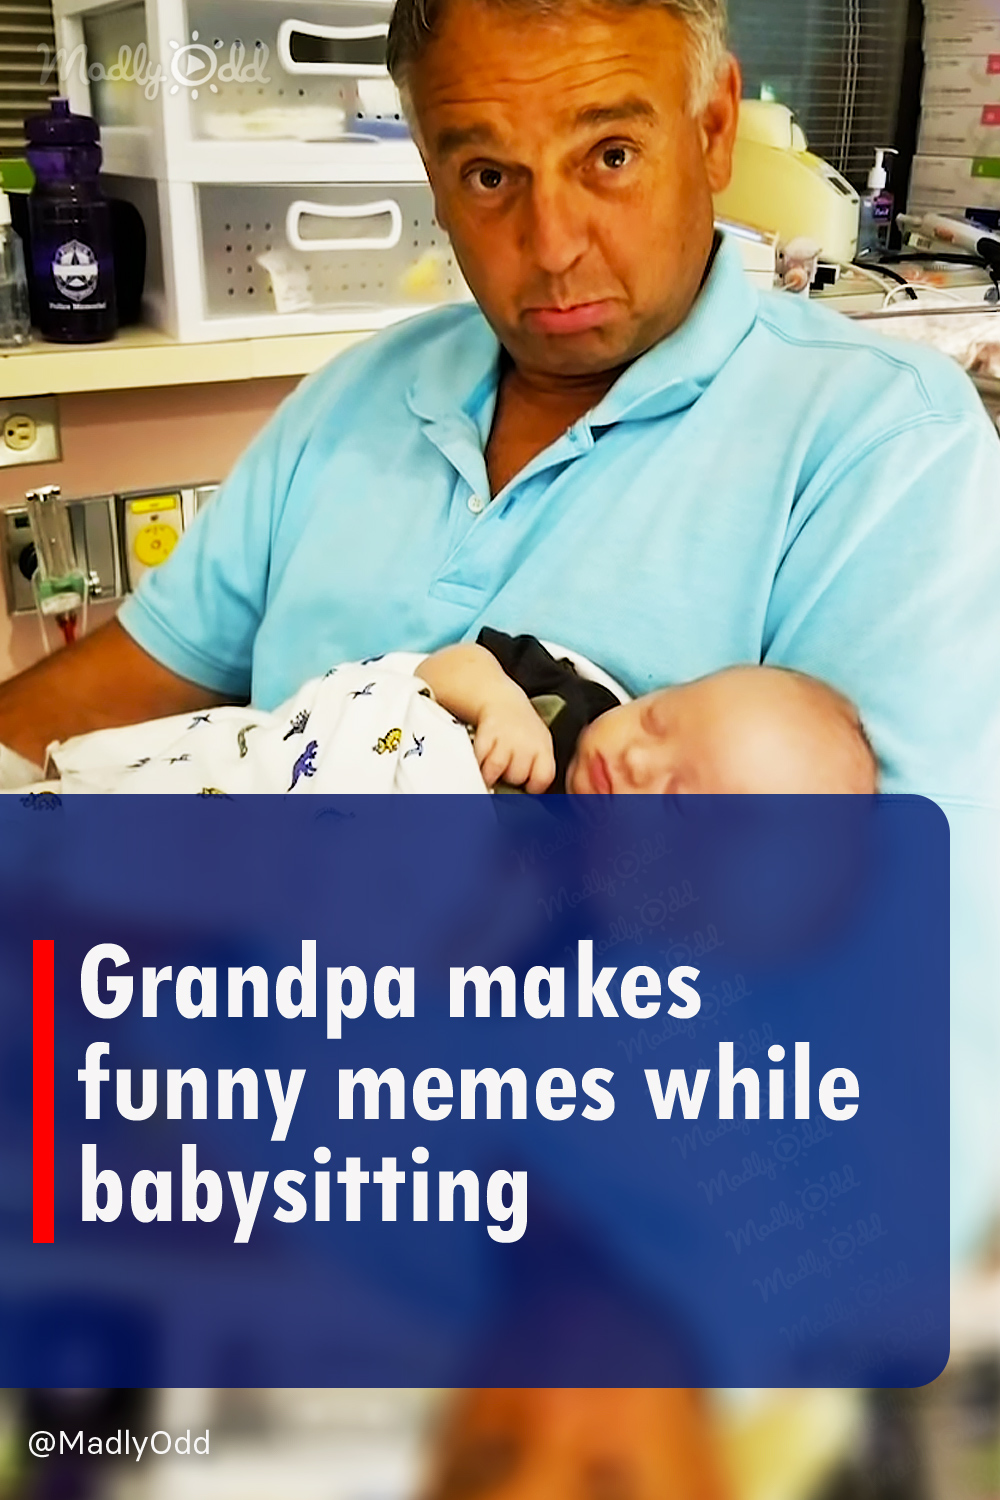 Grandpa makes funny memes while babysitting